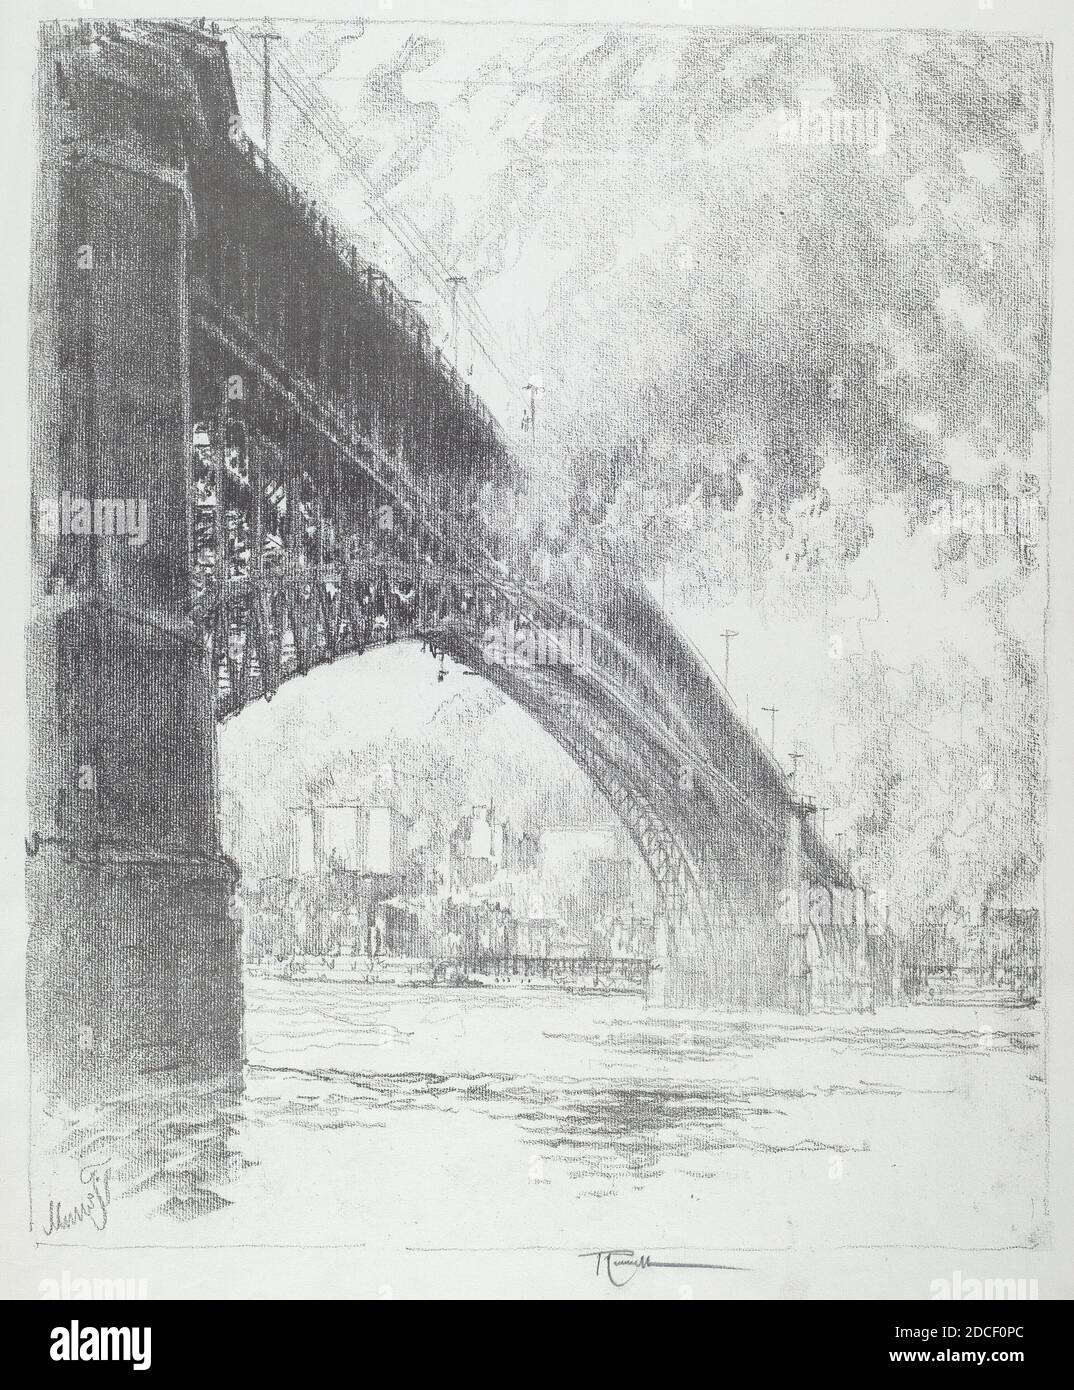 Joseph Pennell, (artist), American, 1857 - 1926, Eads Bridge, St. Louis, St. Louis Set, (series), 1919, lithograph Stock Photo